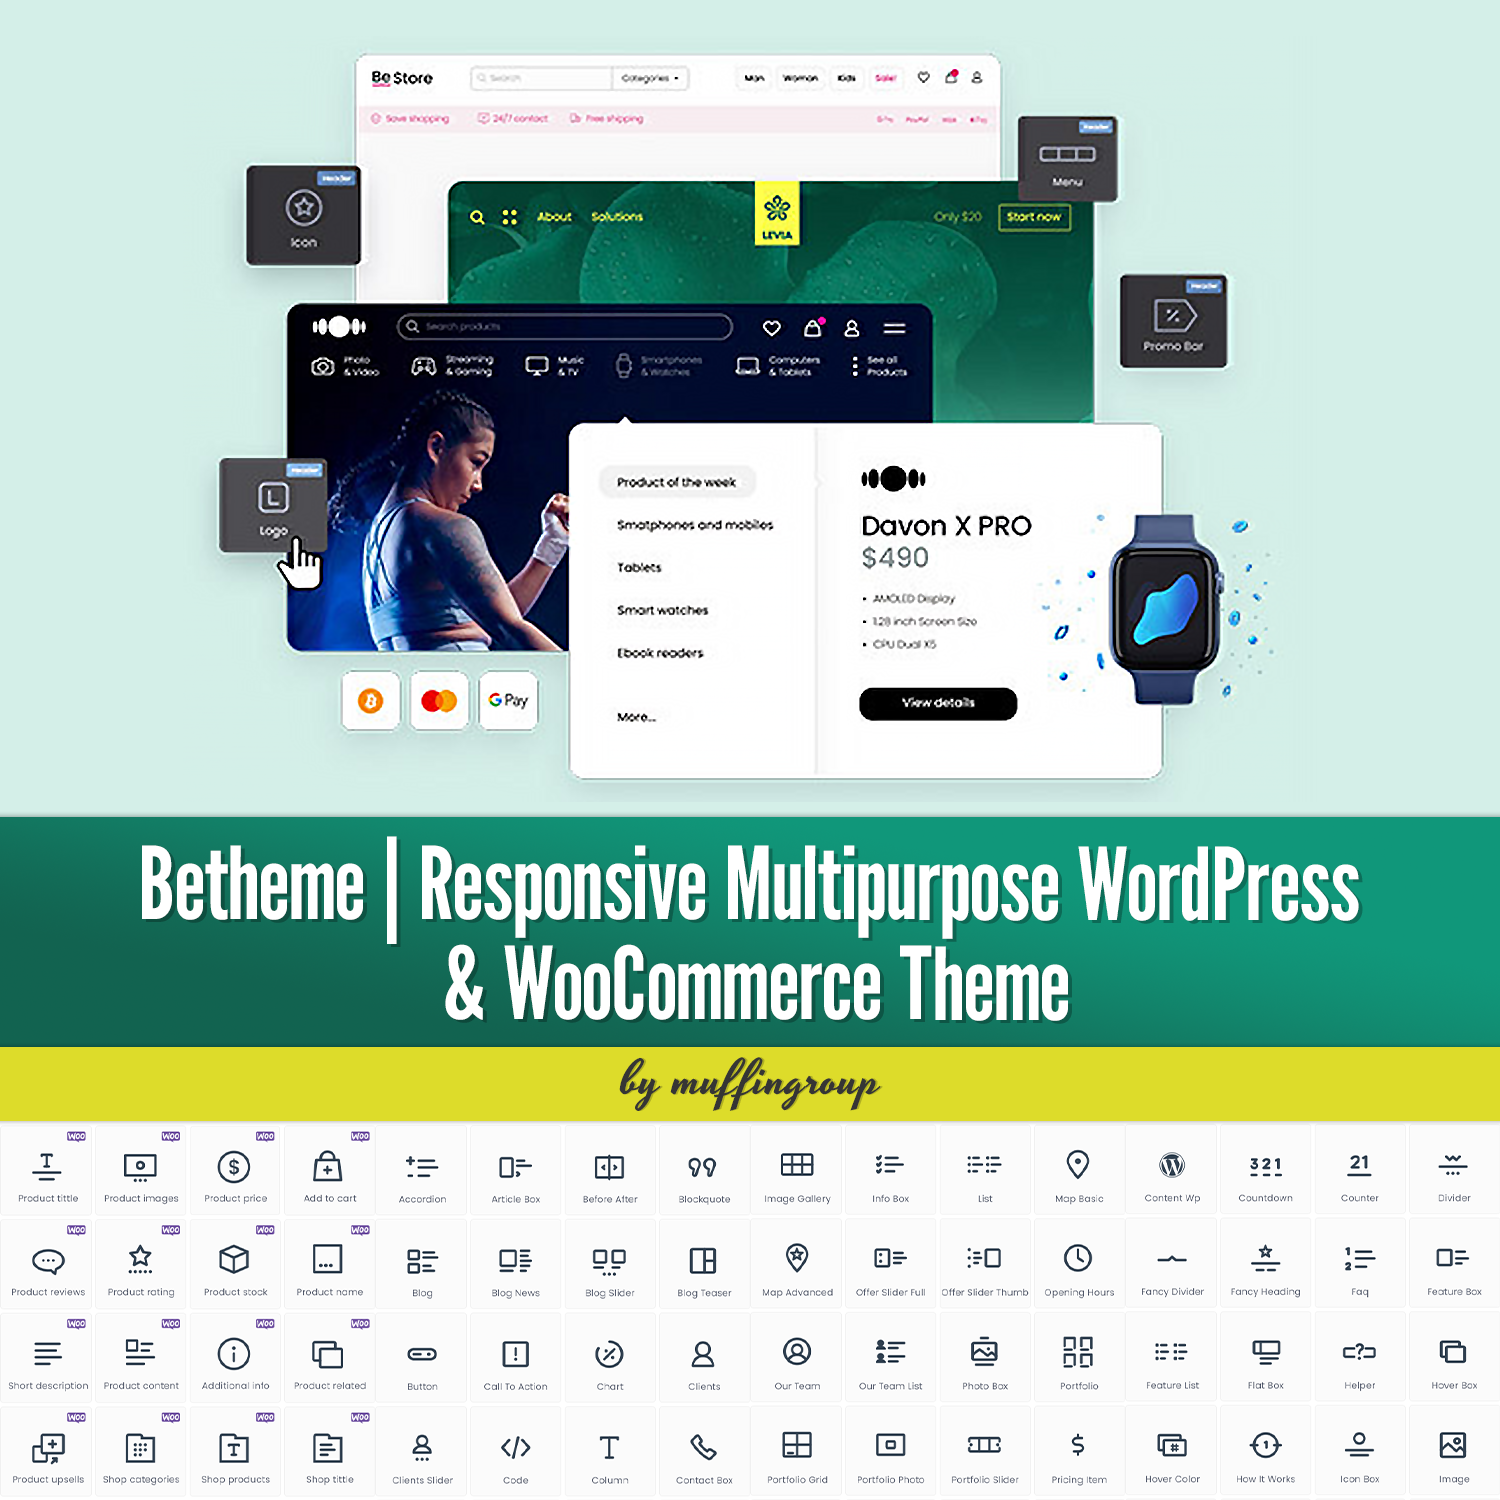 Images with betheme responsive multipurpose wordpress woocommerce theme.